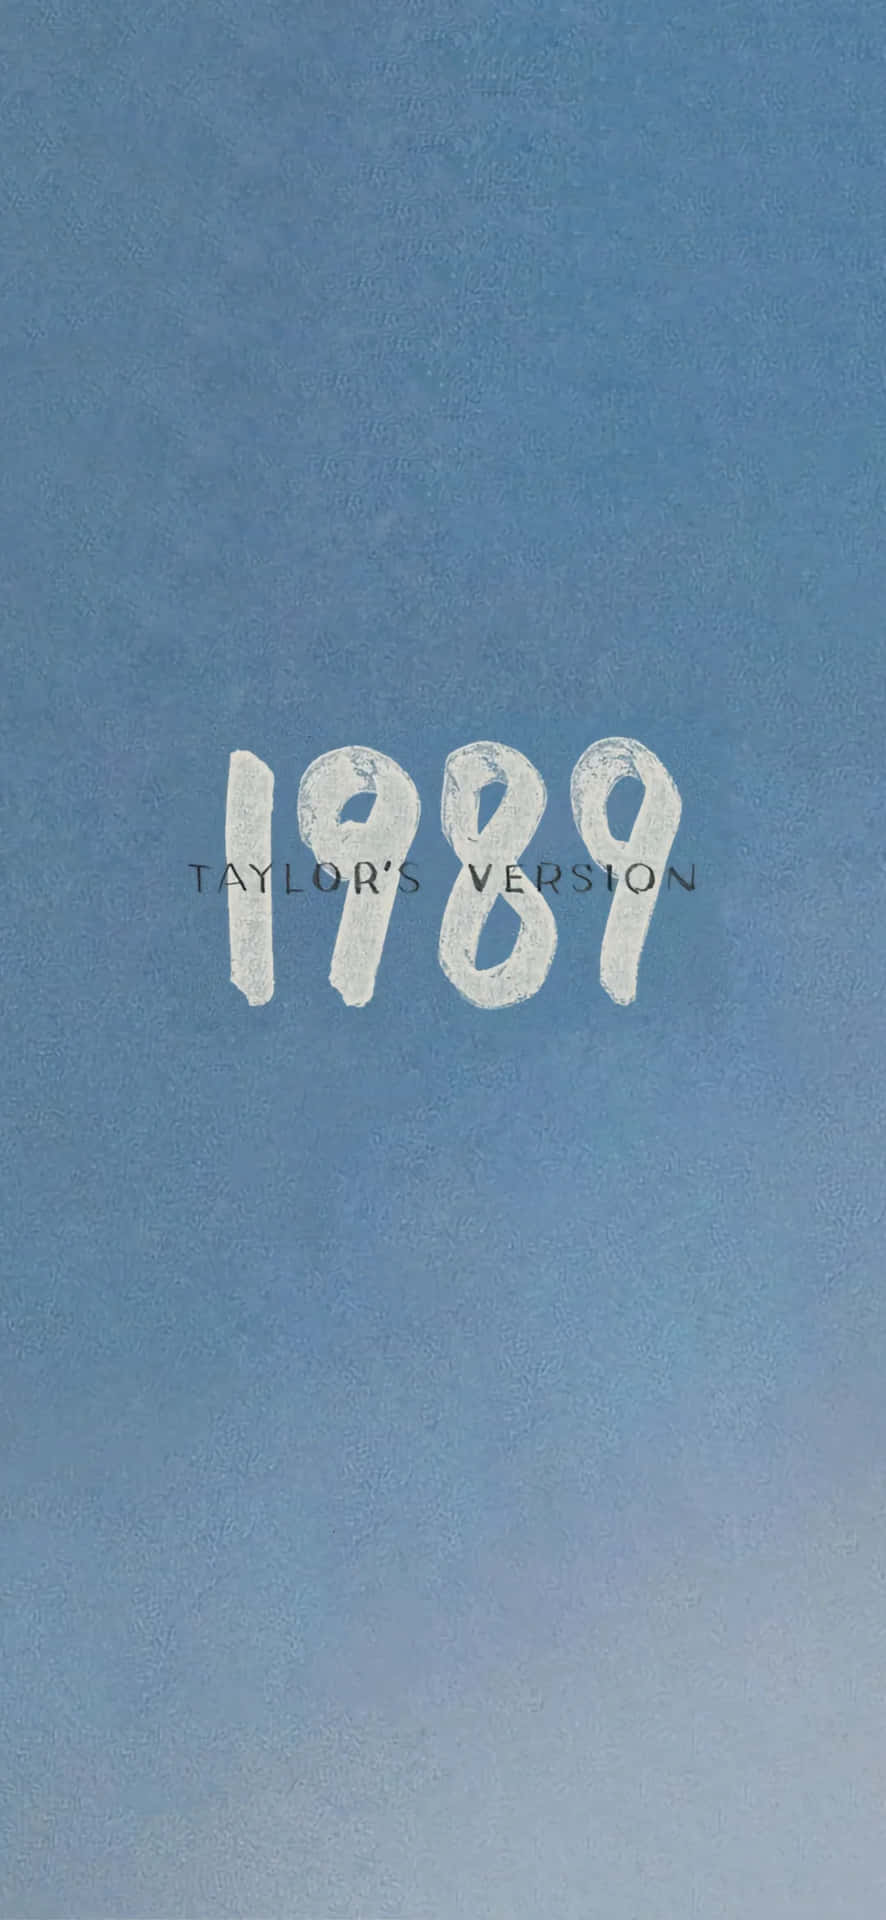 1989 Taylors Version Album Cover Wallpaper